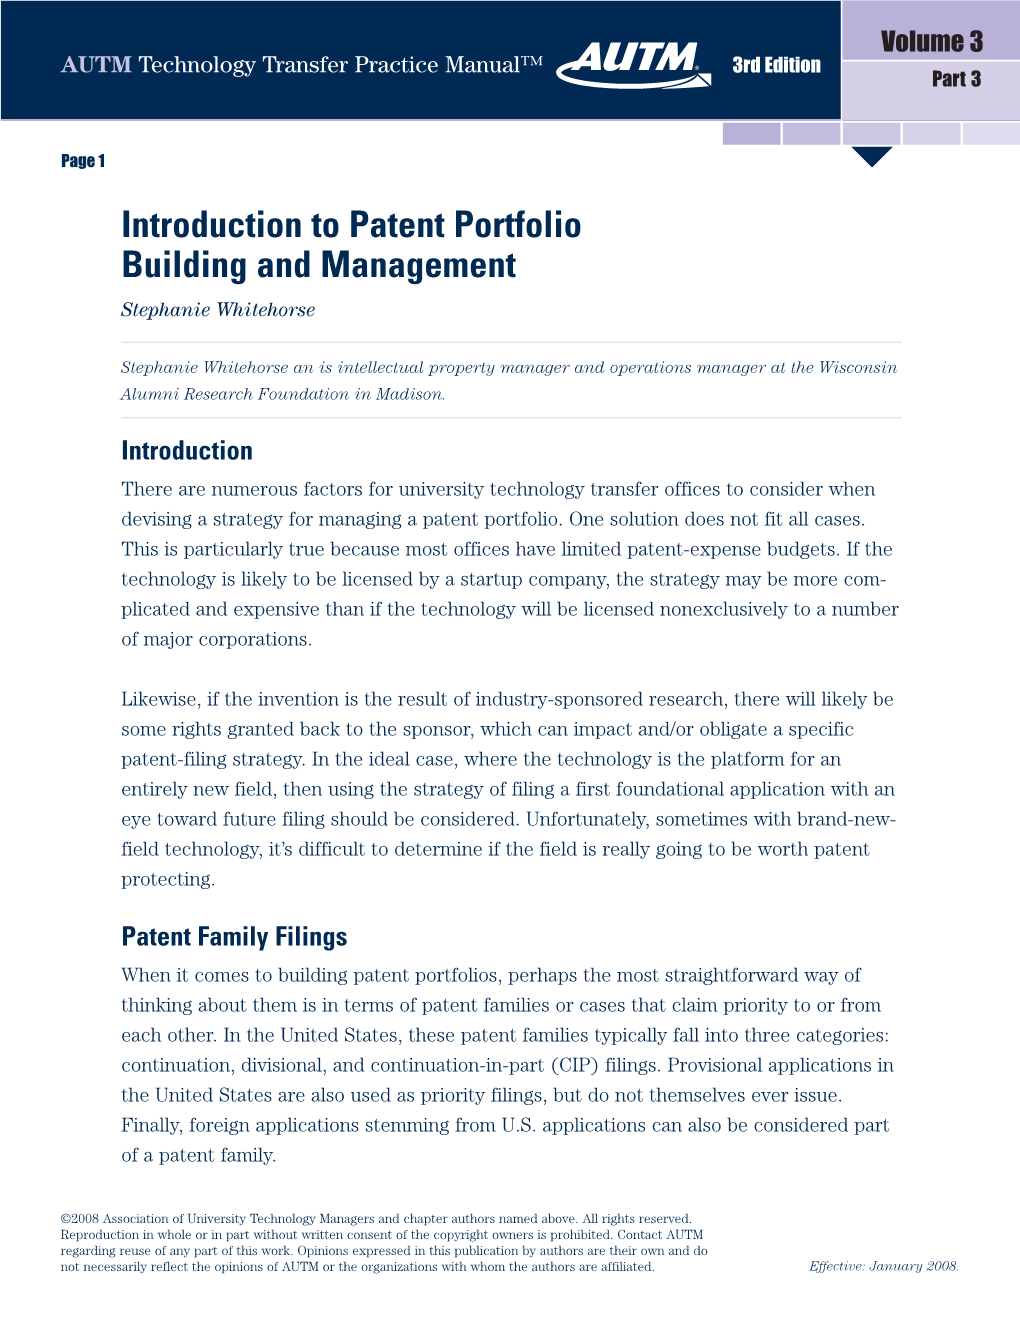 Patent Family Filings